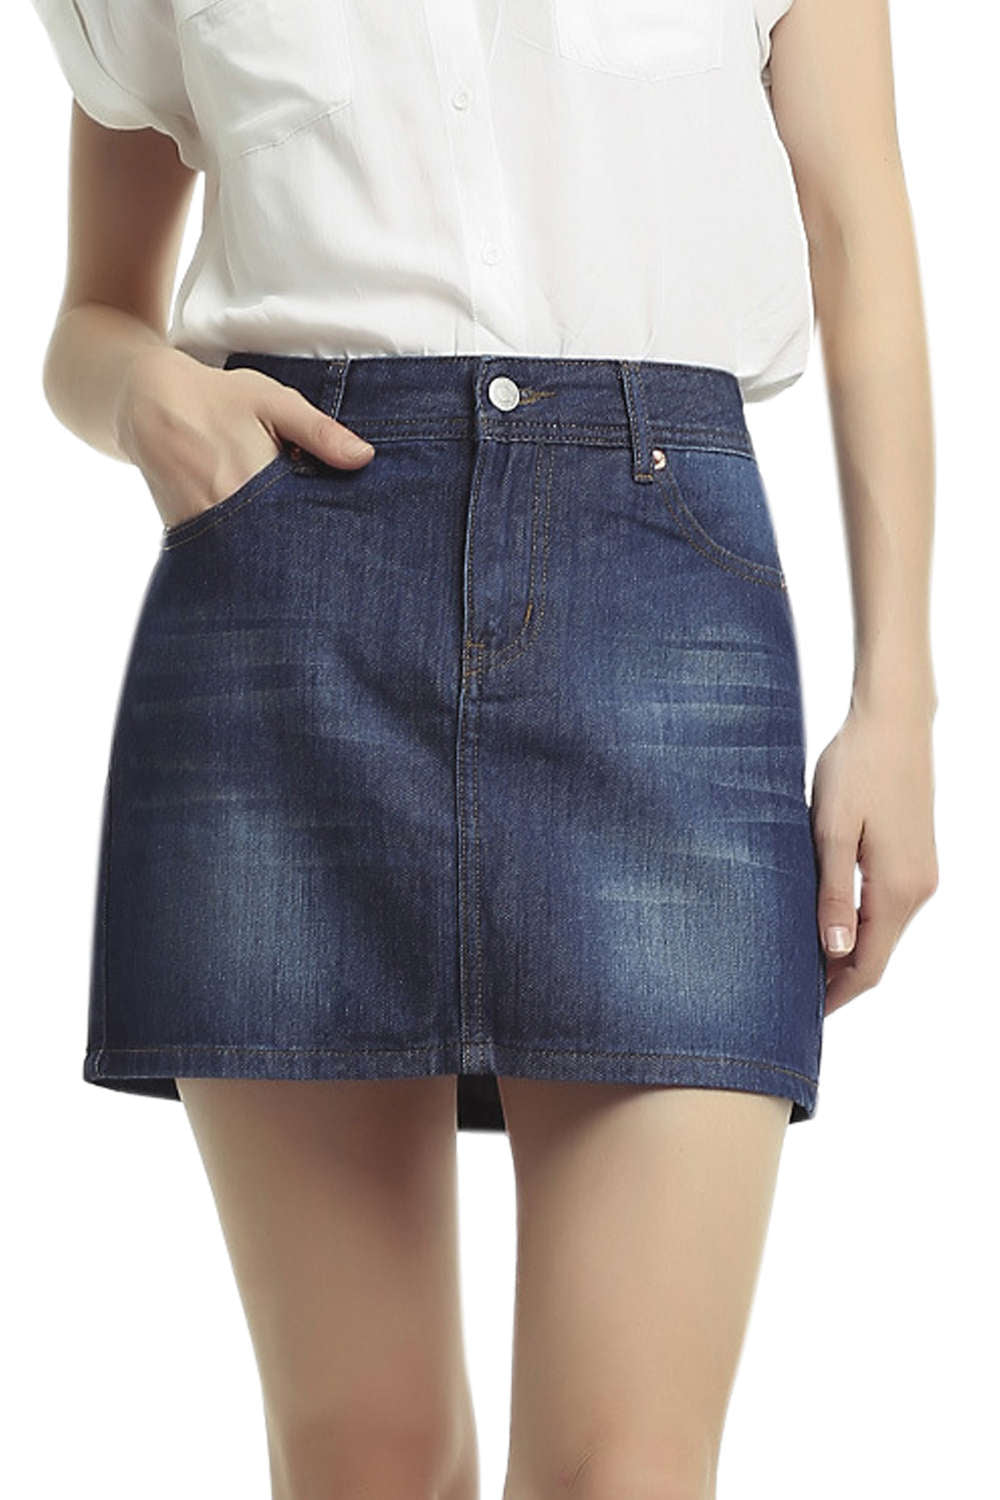 Iyasson Women's Demin Skirt Jean Skirts